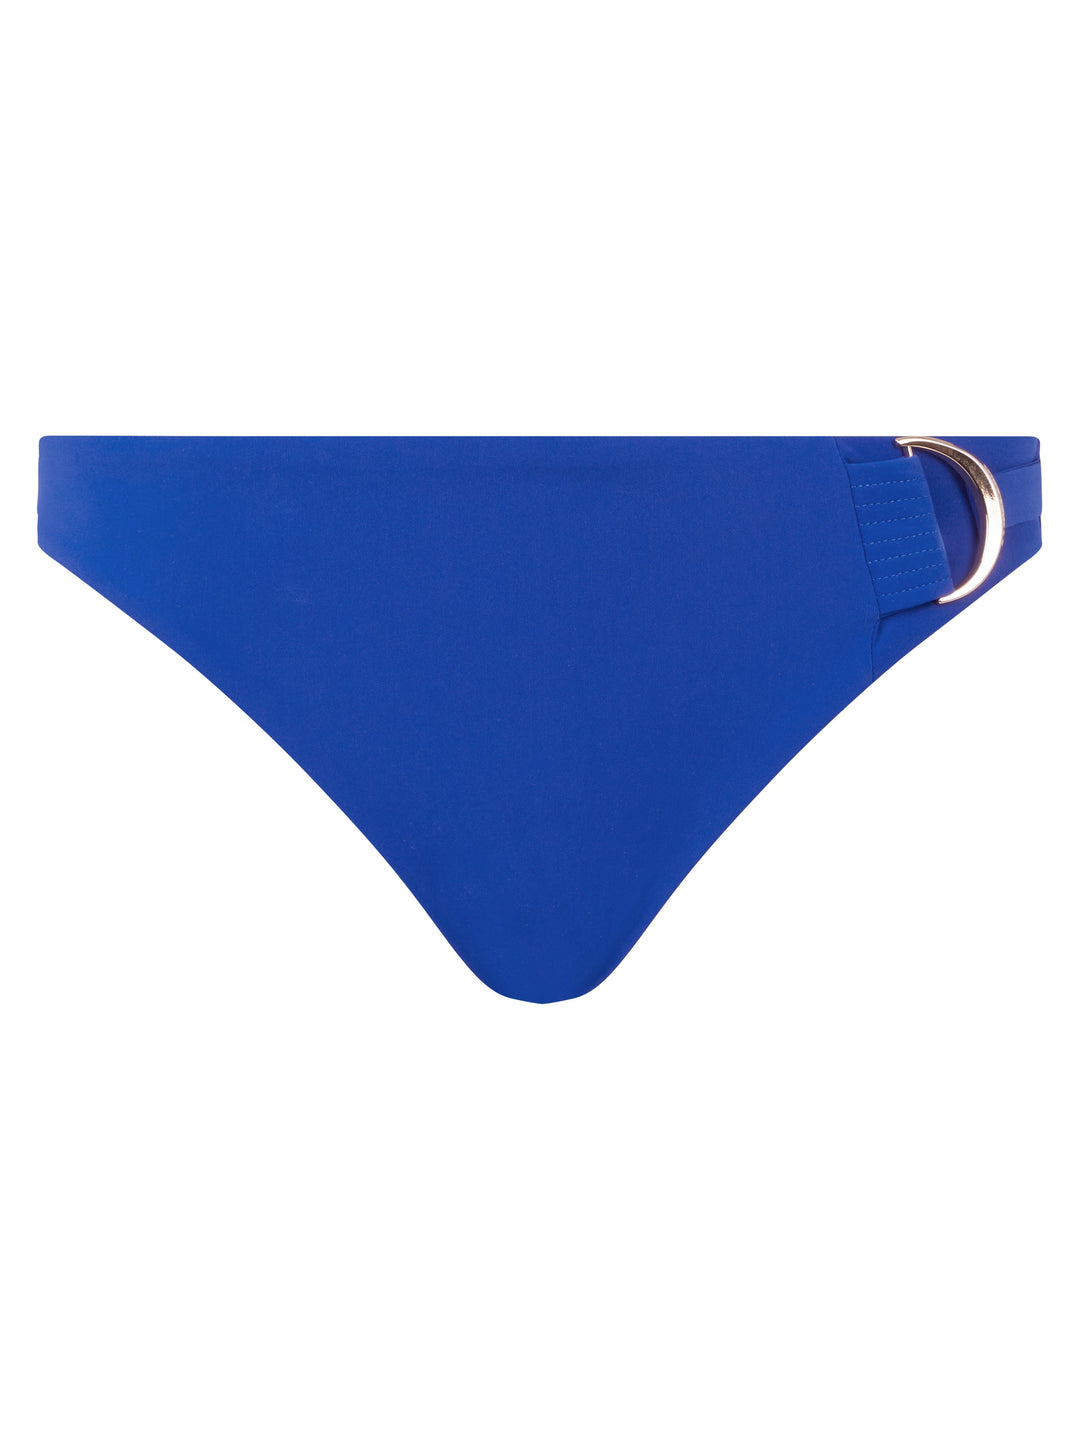 Chantelle Maillots de Bain - Slip de Bikini Céleste Slip de Bikini Bleu Profond Chantelle Maillots de Bain